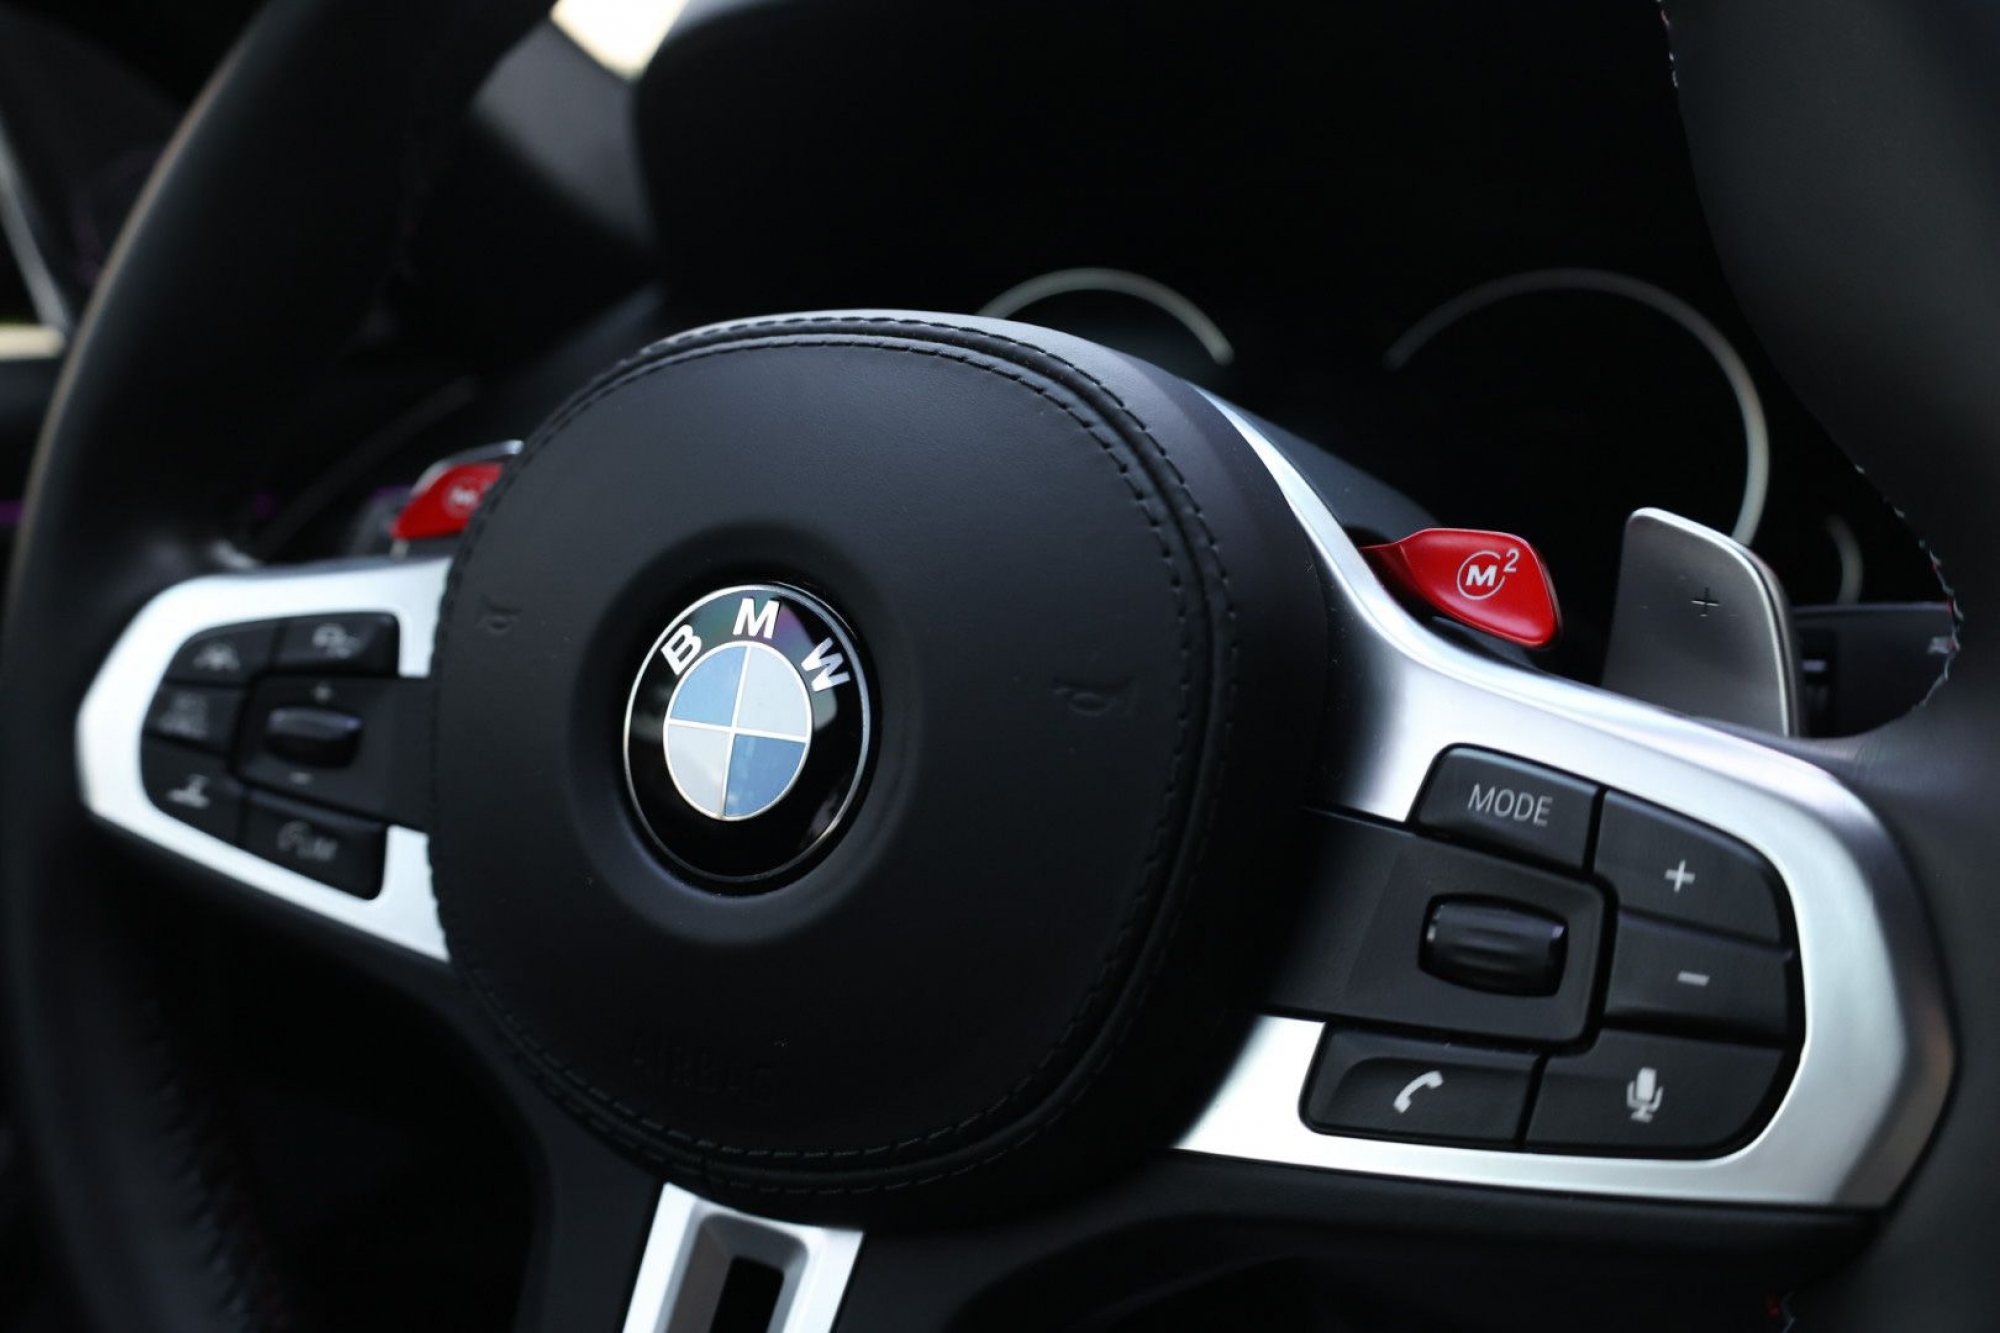 BMW M5 COMPETITION AUT. -NACIONAL, IVA DEDUCIBLE-